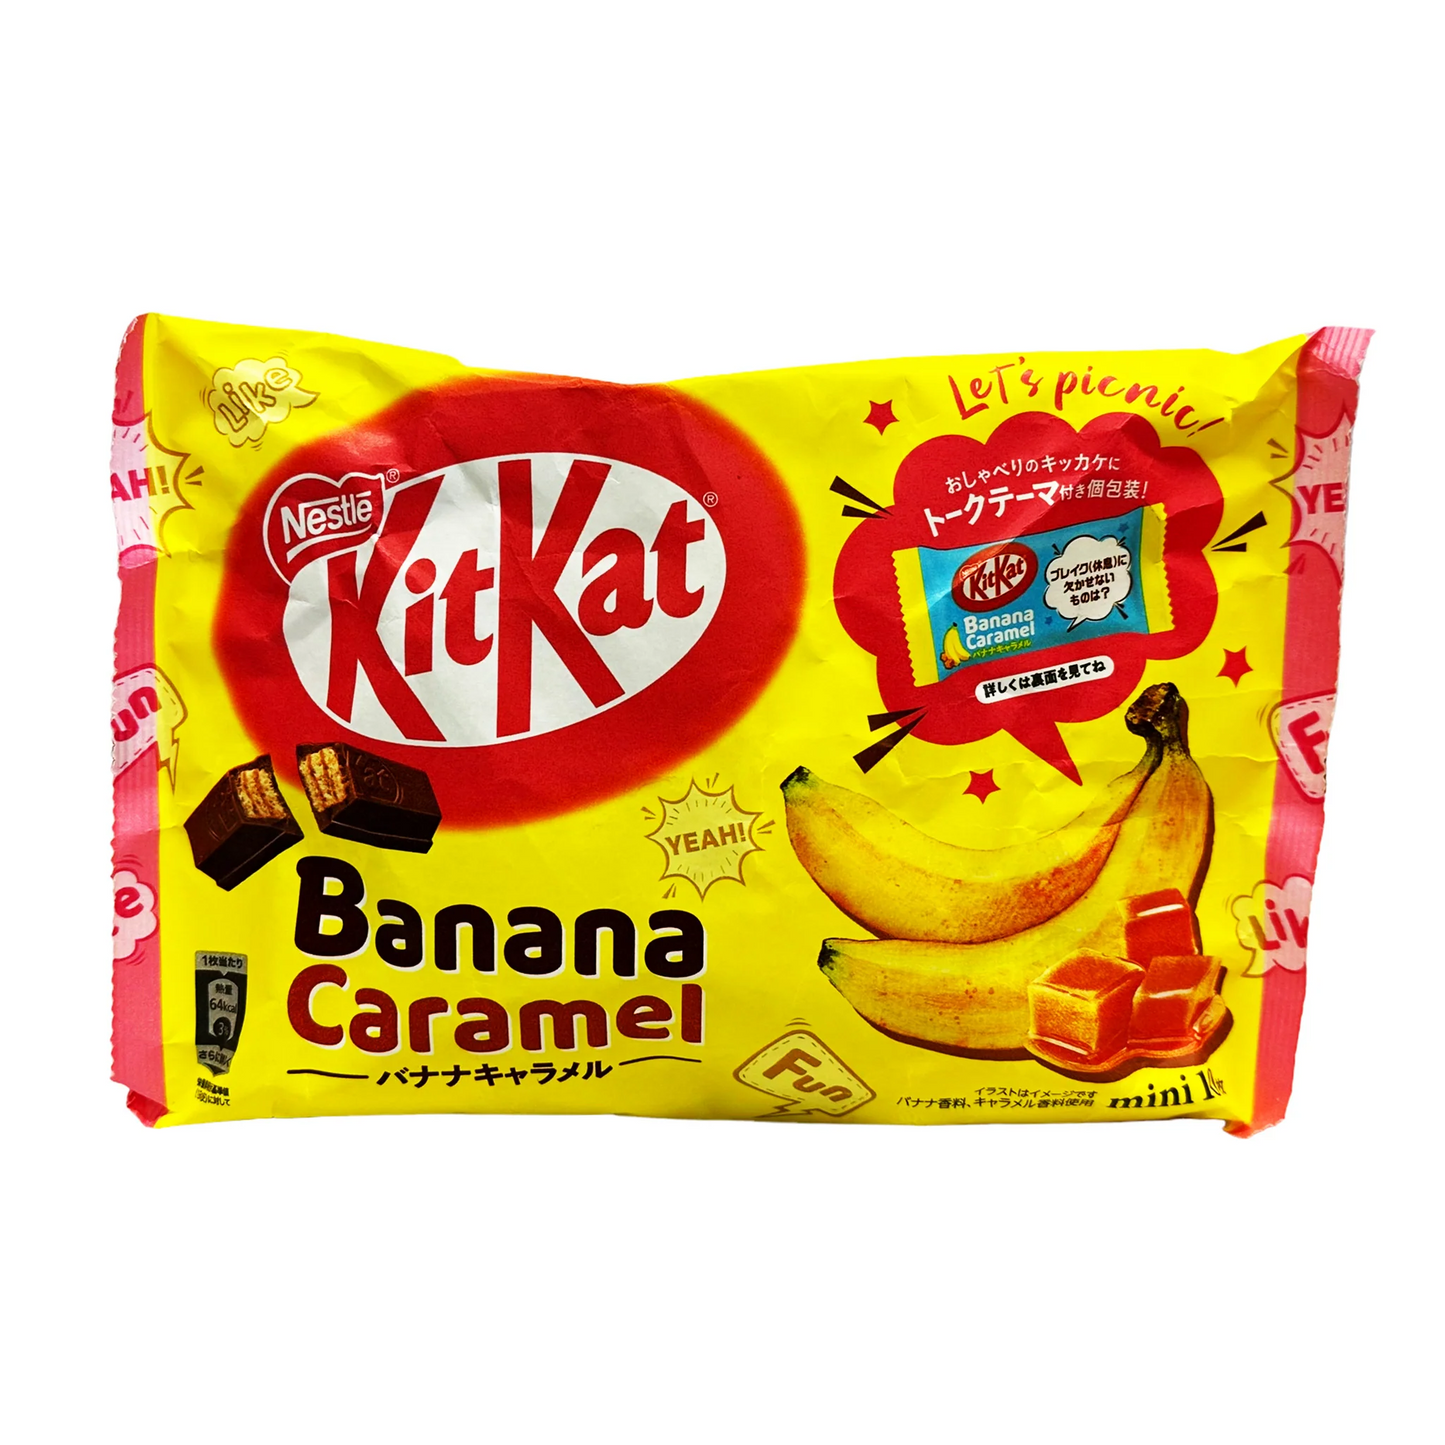 Nestle - Kit Kat - Banana Caramel (4.5 oz bag) - Product of Japan